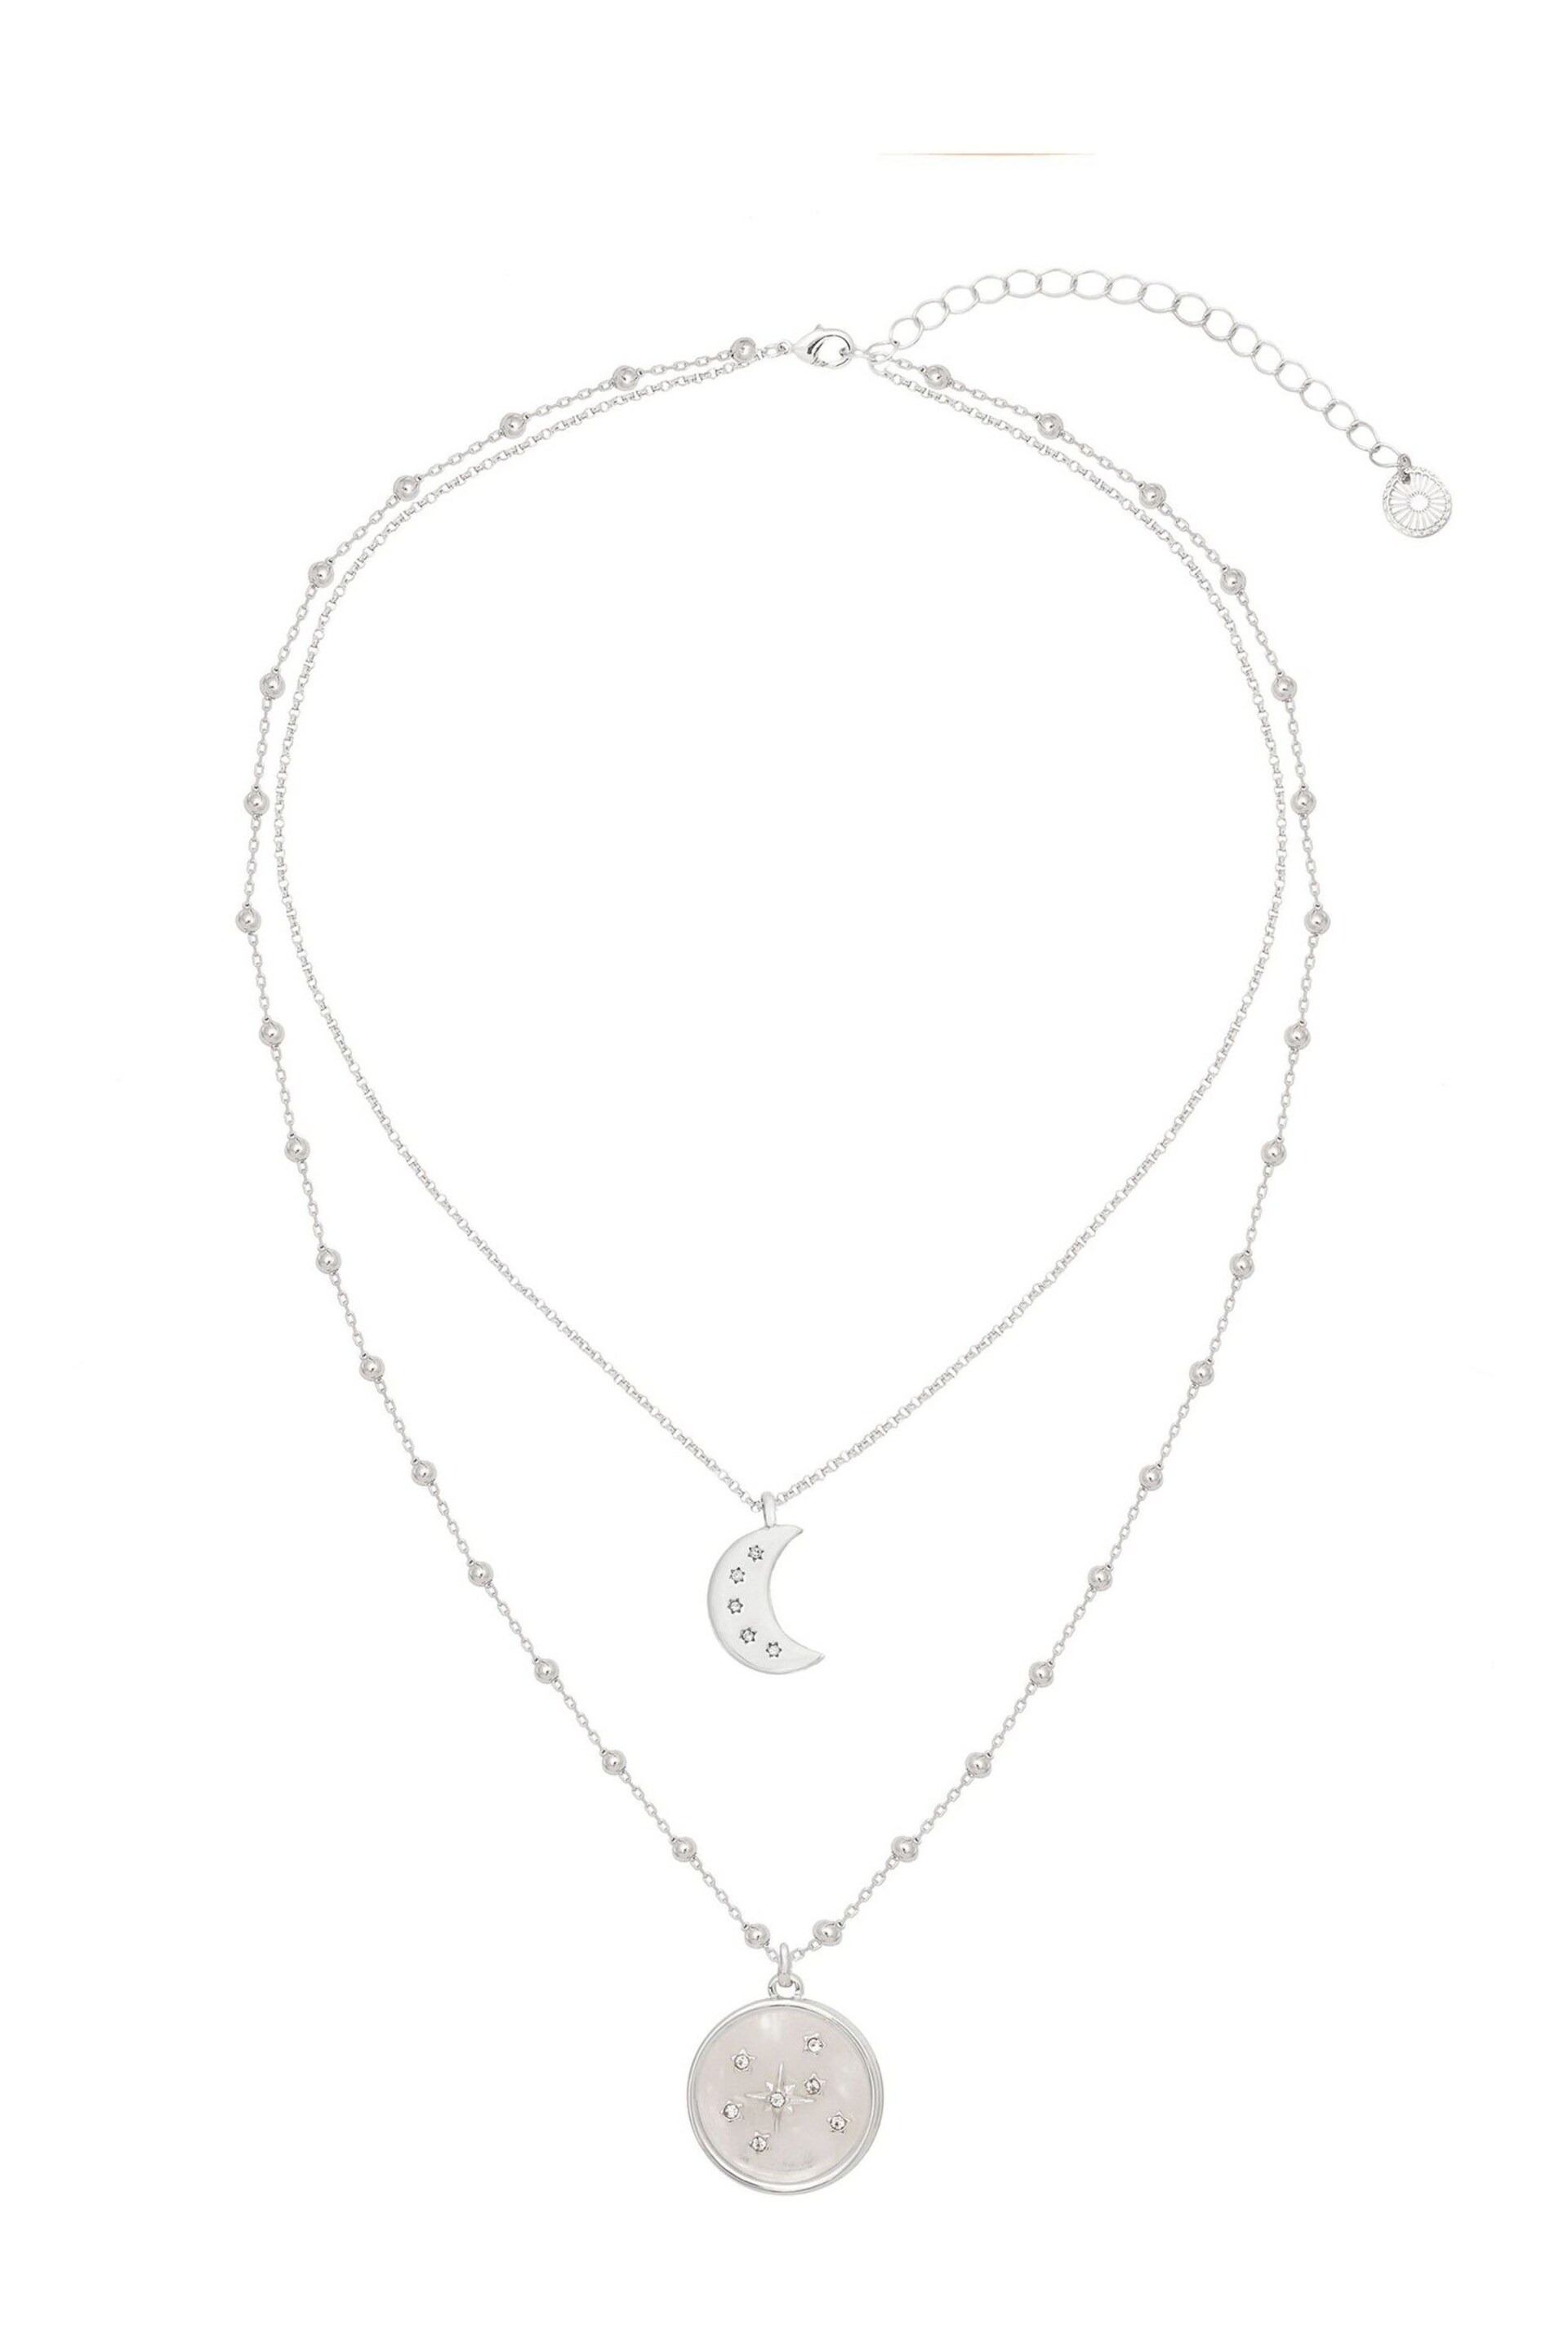 Caramel Jewellery London Silver Tone Constellation White Quartz Layered Necklace - Image 1 of 6